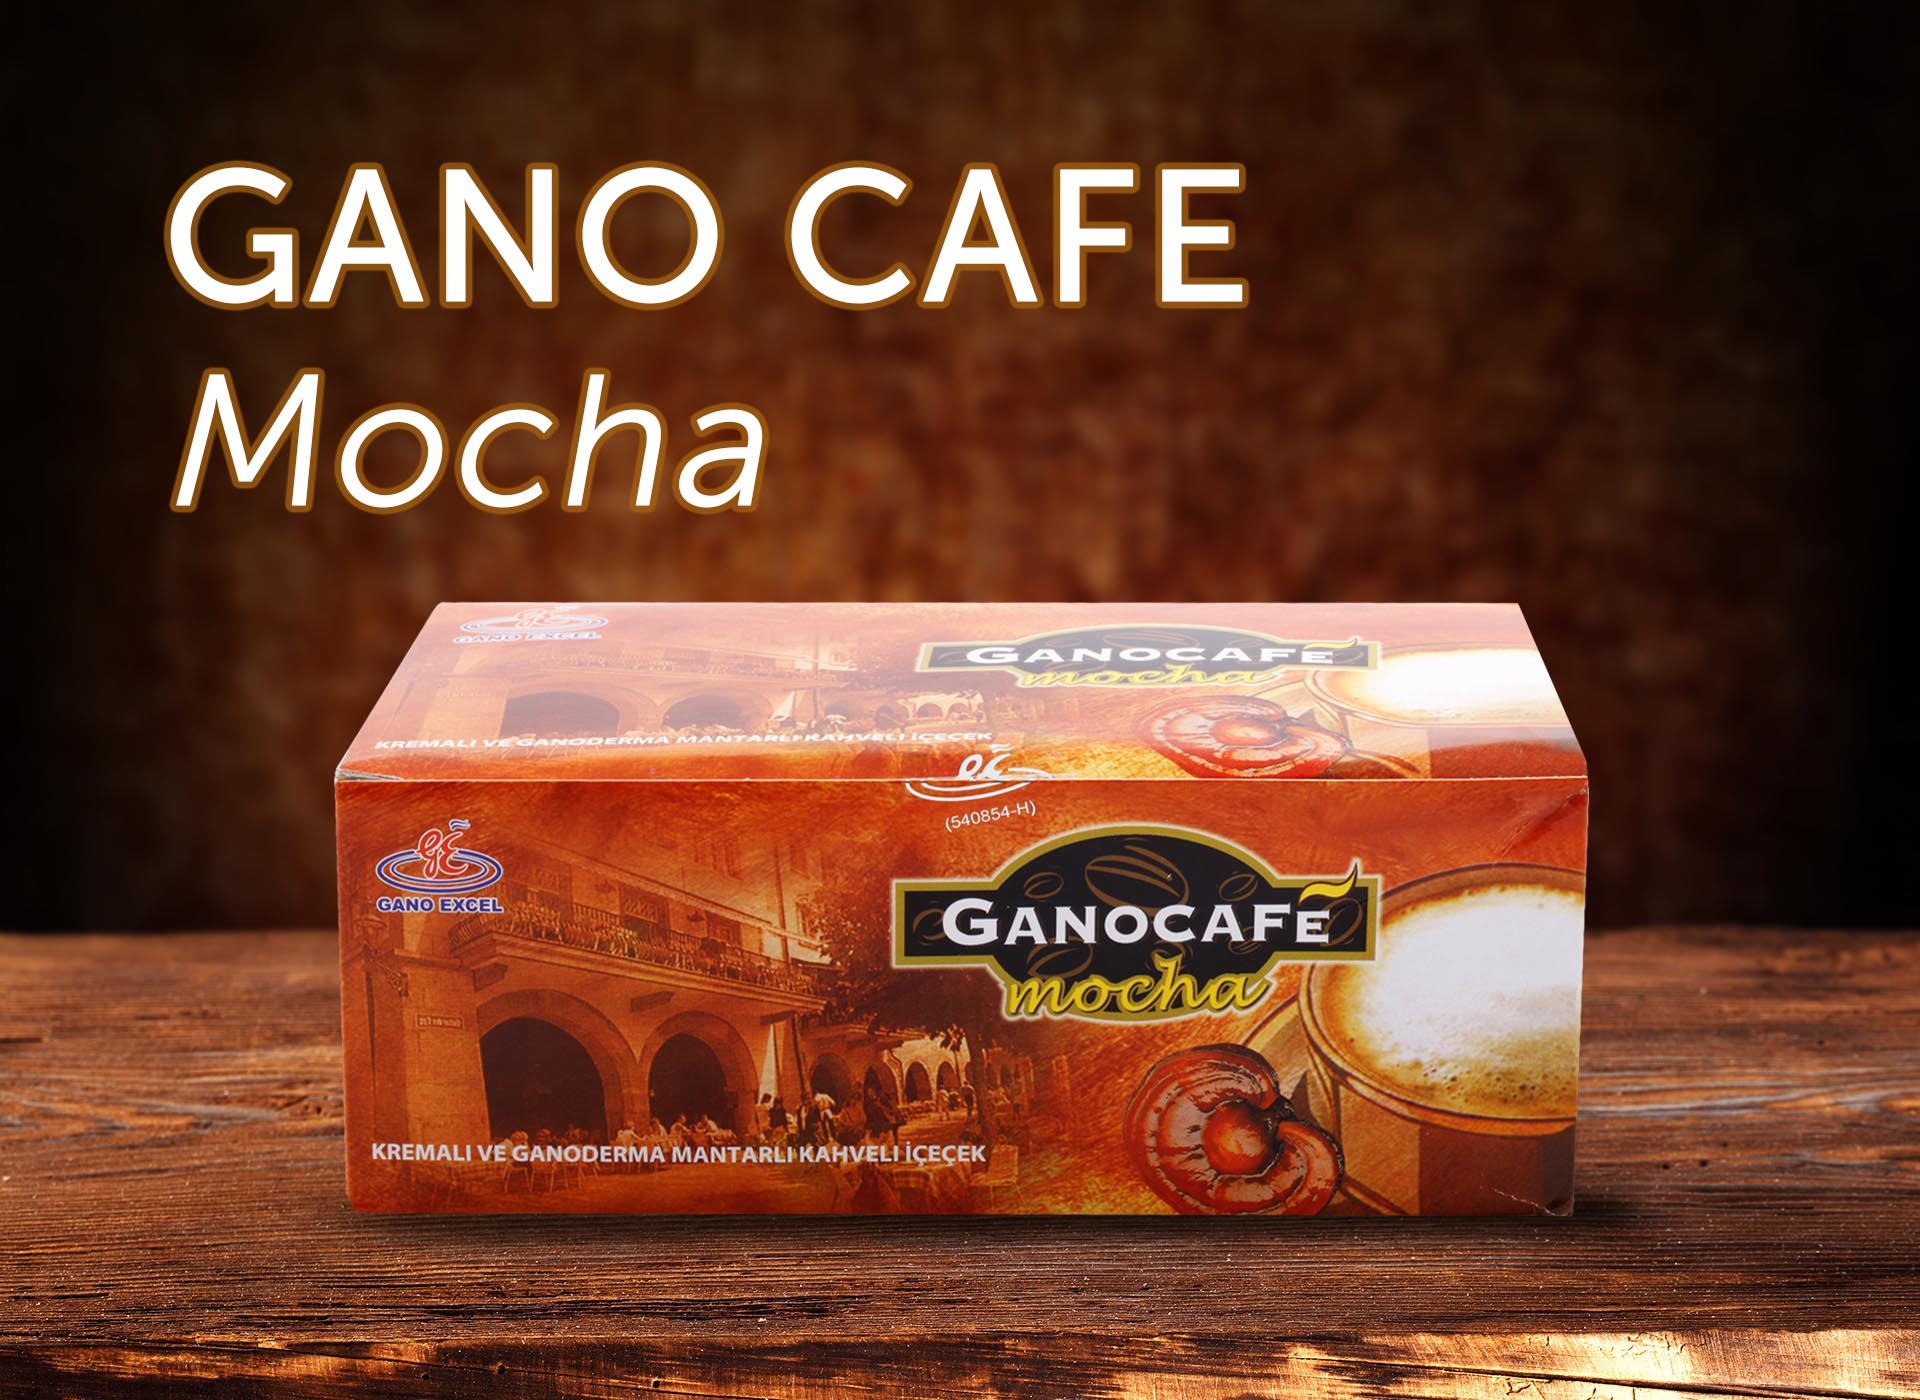 Gano Cafe Mocha